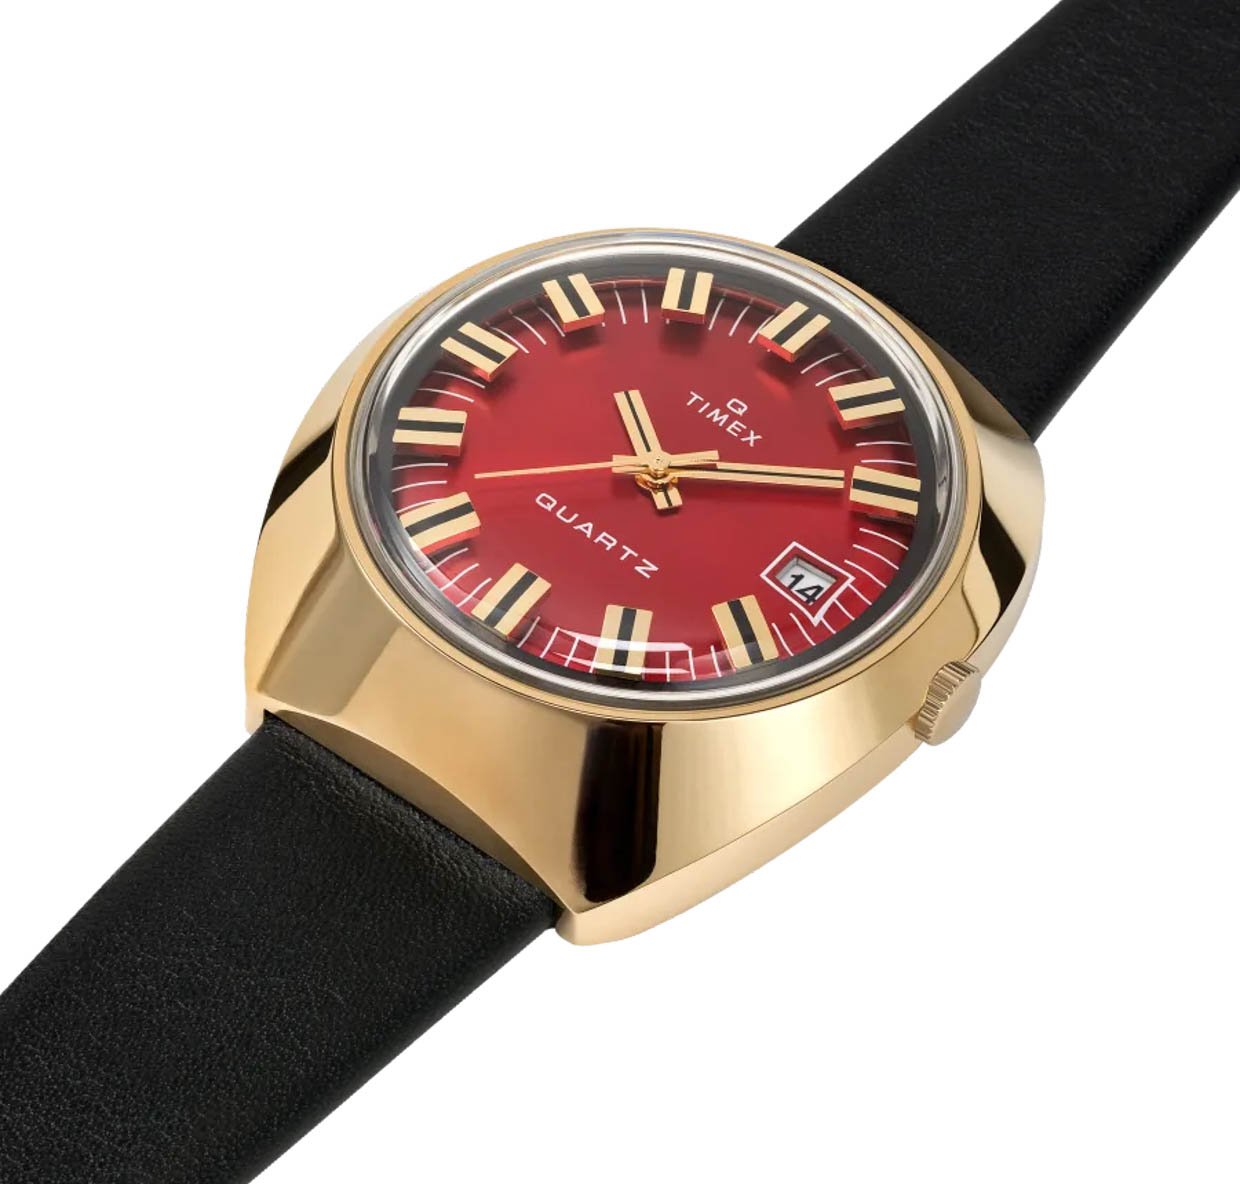 Q Timex 1972 Reissue Goldtone Watch